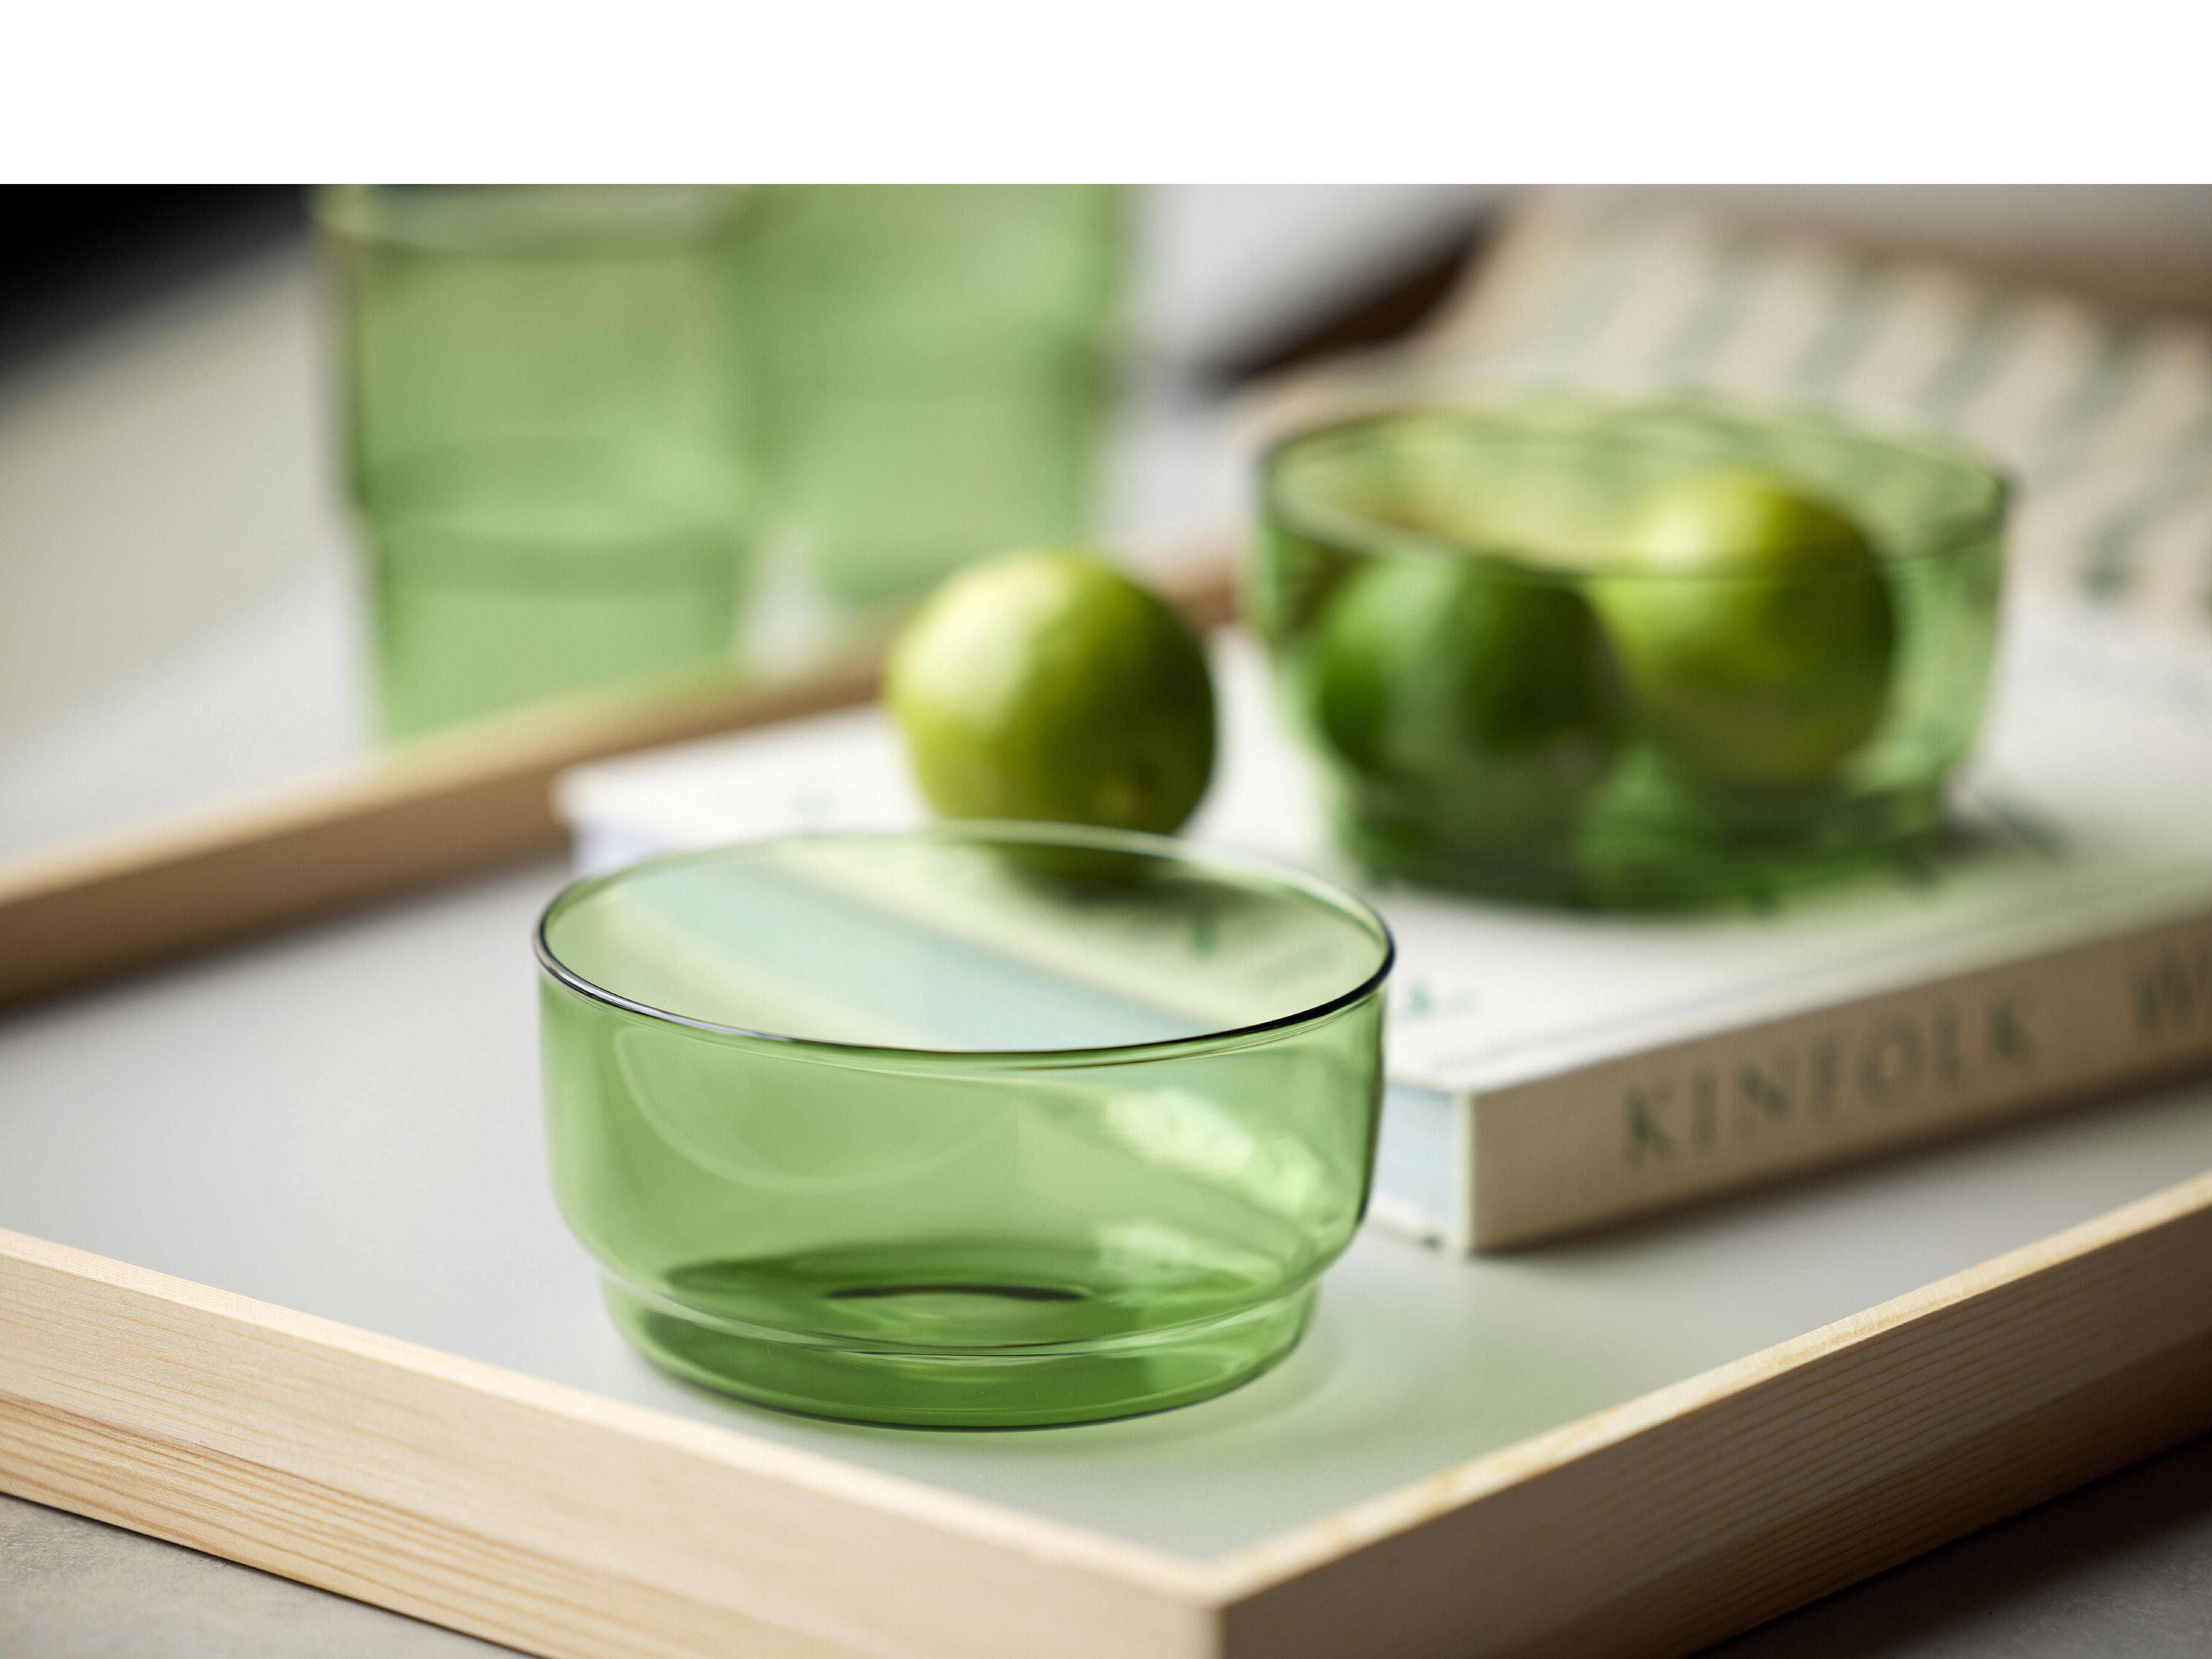 Lyngby Glass Torino Bowl 12 cm 2 pcs., Green